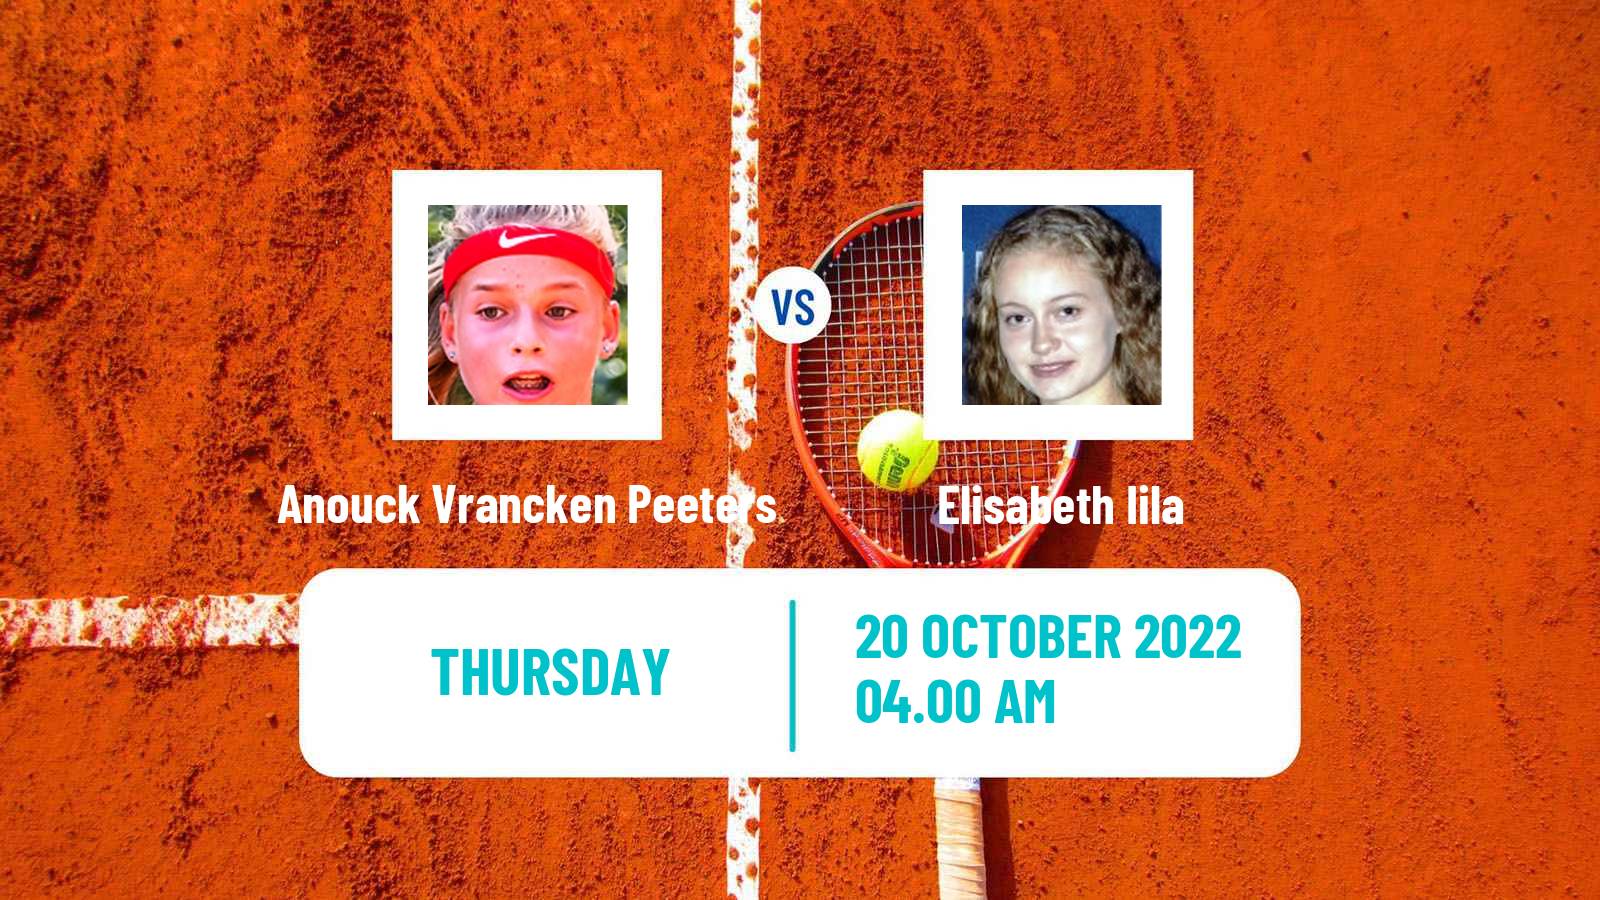 Tennis ITF Tournaments Anouck Vrancken Peeters - Elisabeth Iila